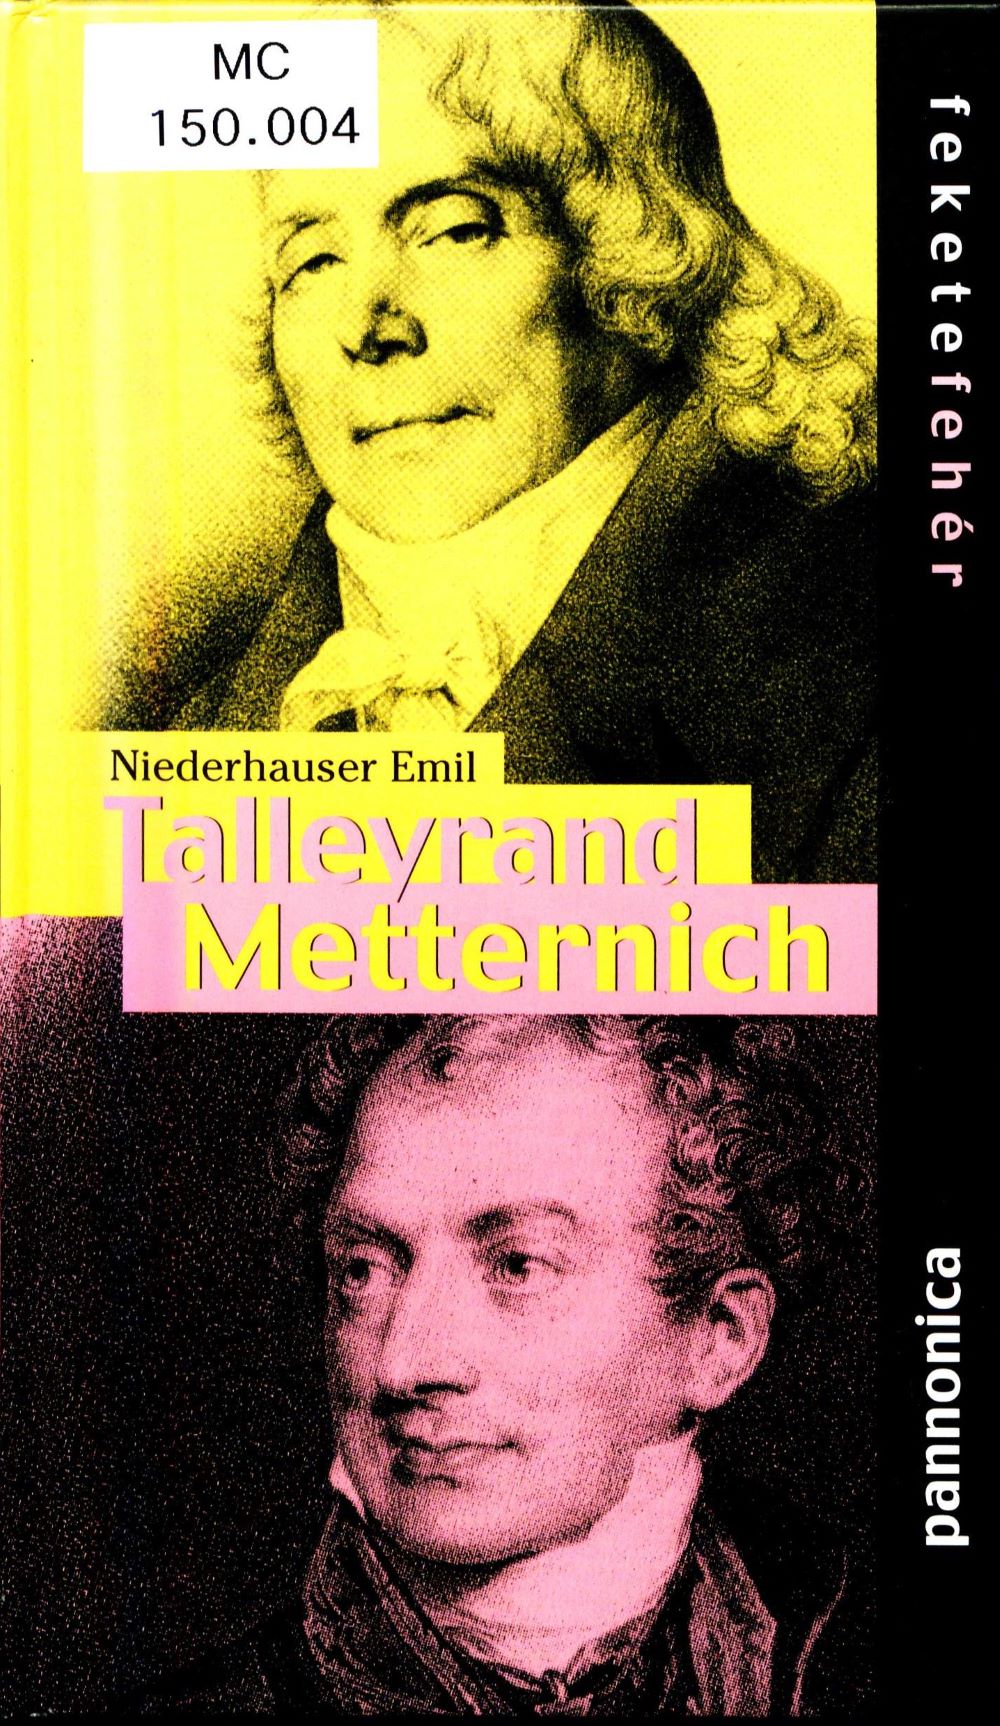 Niederhauser Emil: Talleyrand – Metternich, Budapest, Pannonica, 2004. – Törzsgyűjtemény https://nektar.oszk.hu/hu/manifestation/2532817